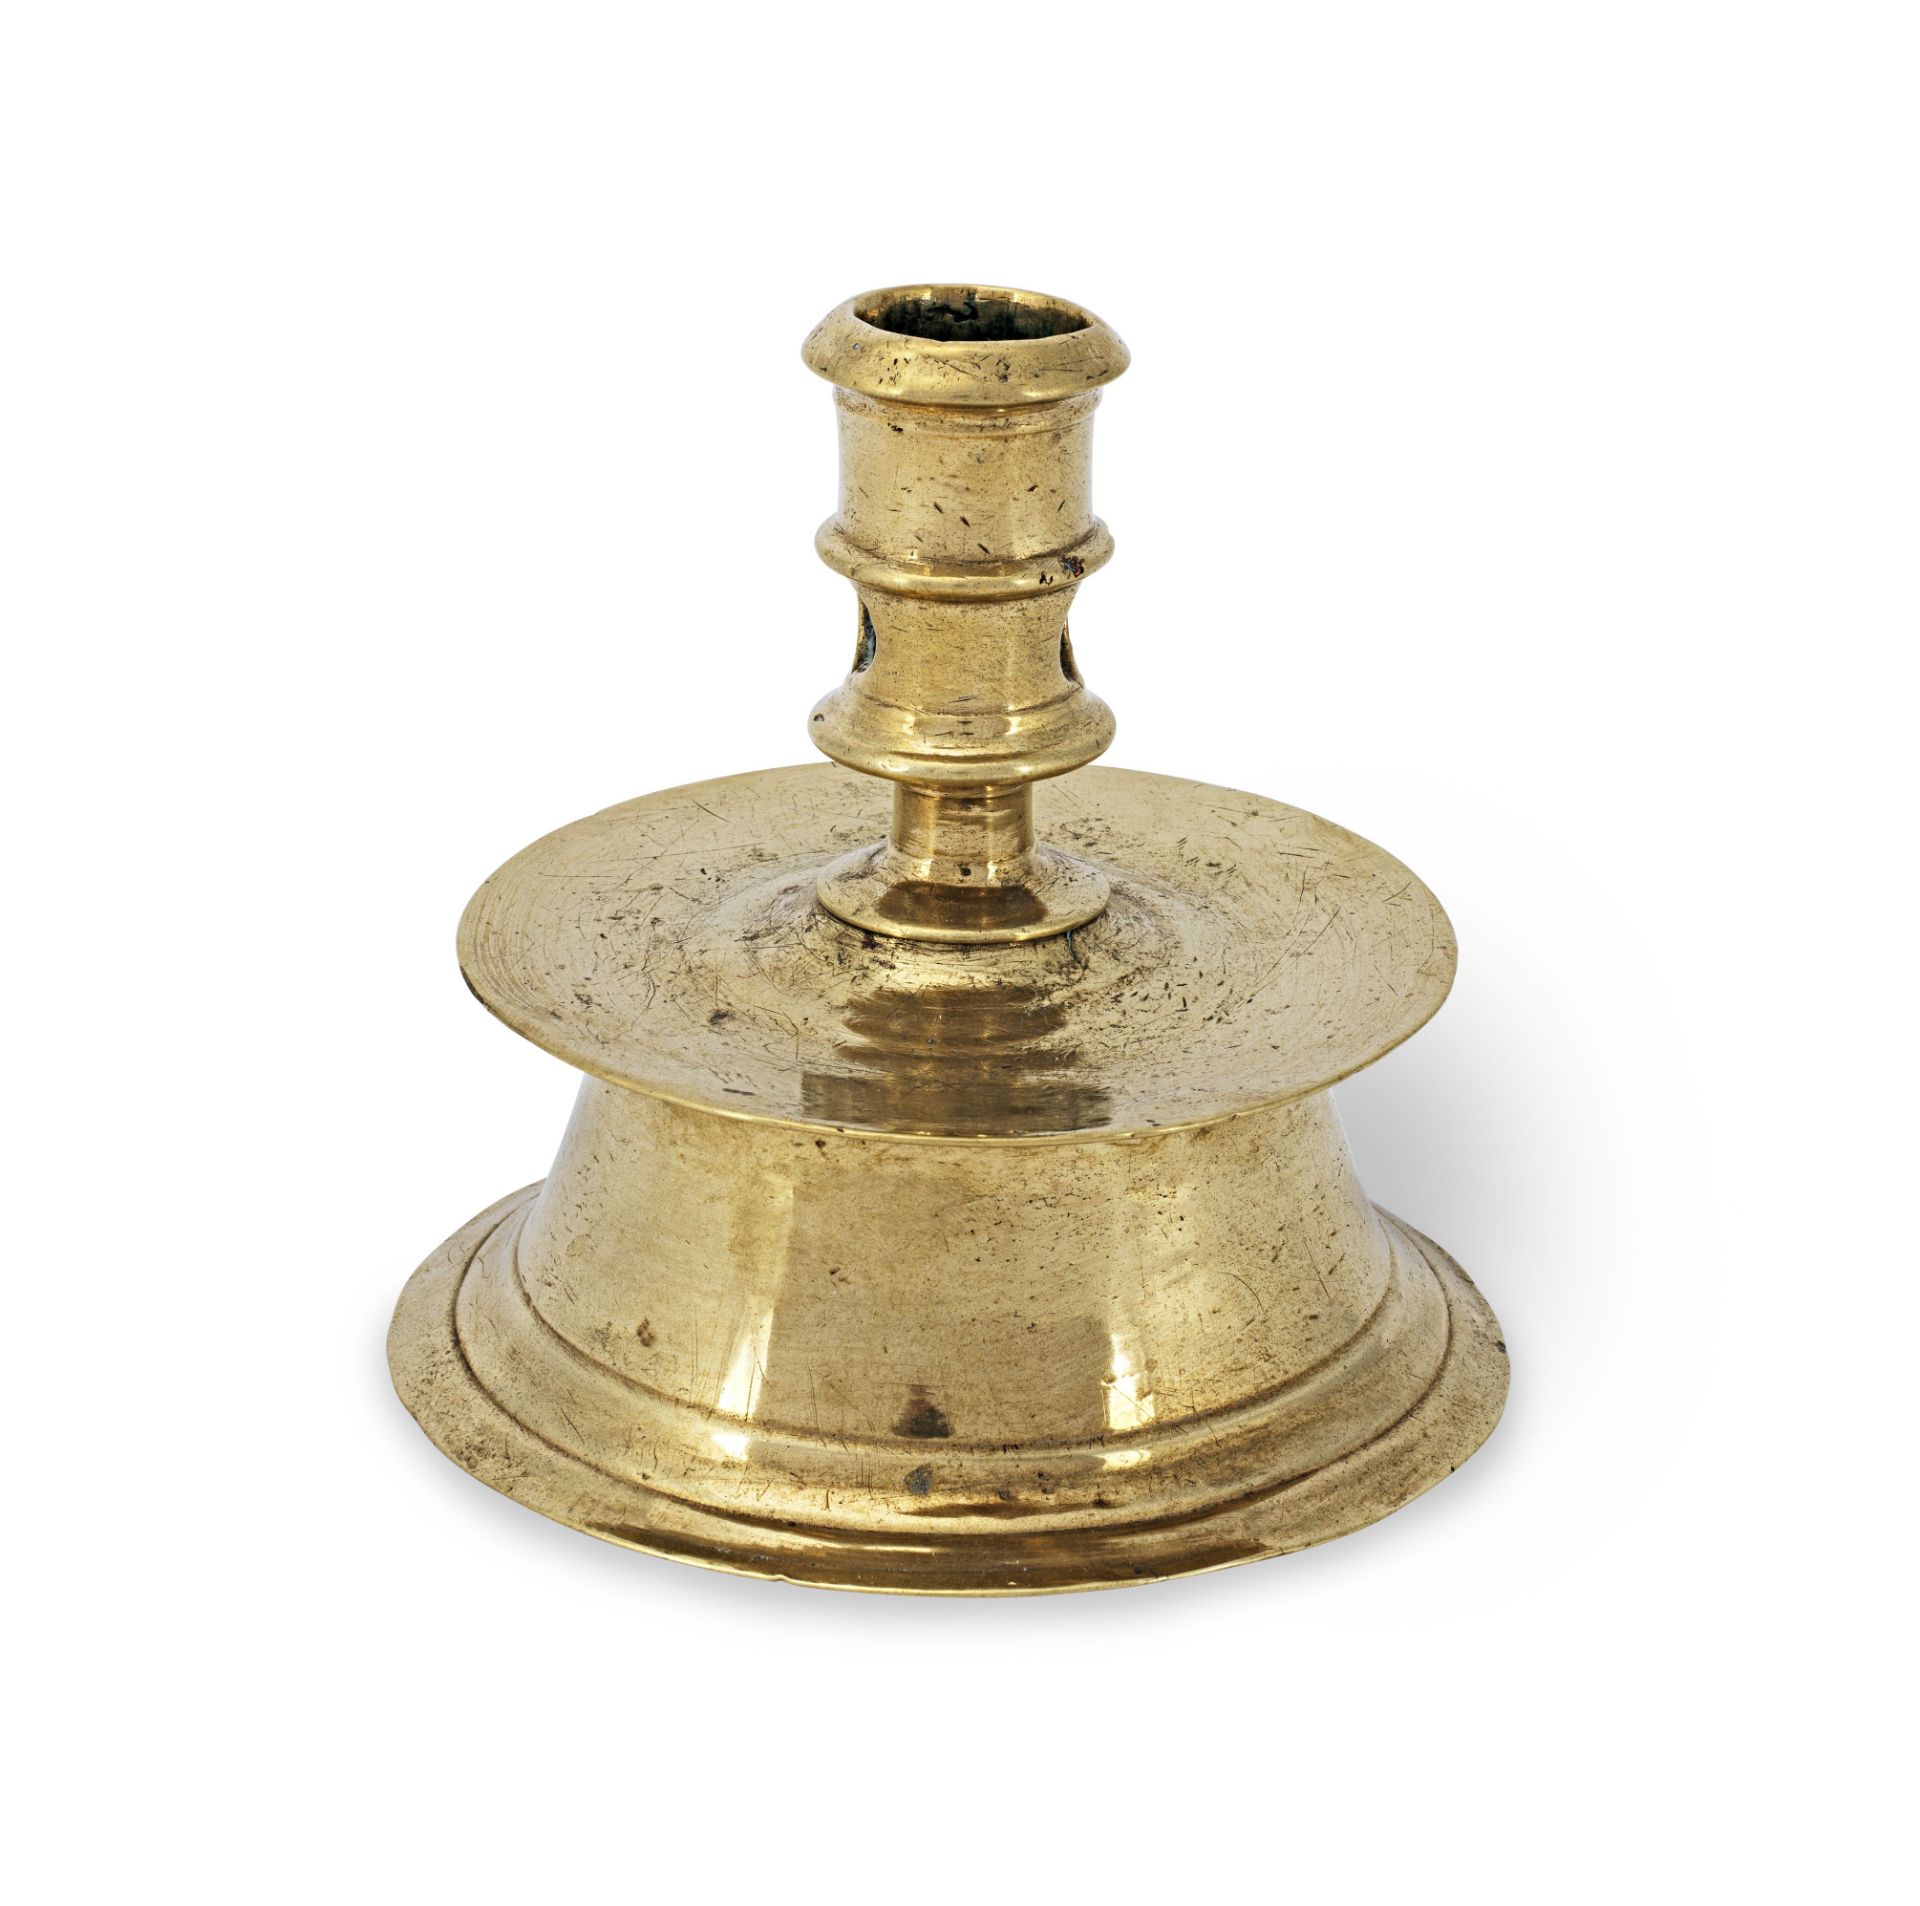 A 16th century brass alloy capstan socket candlestick, North-West European